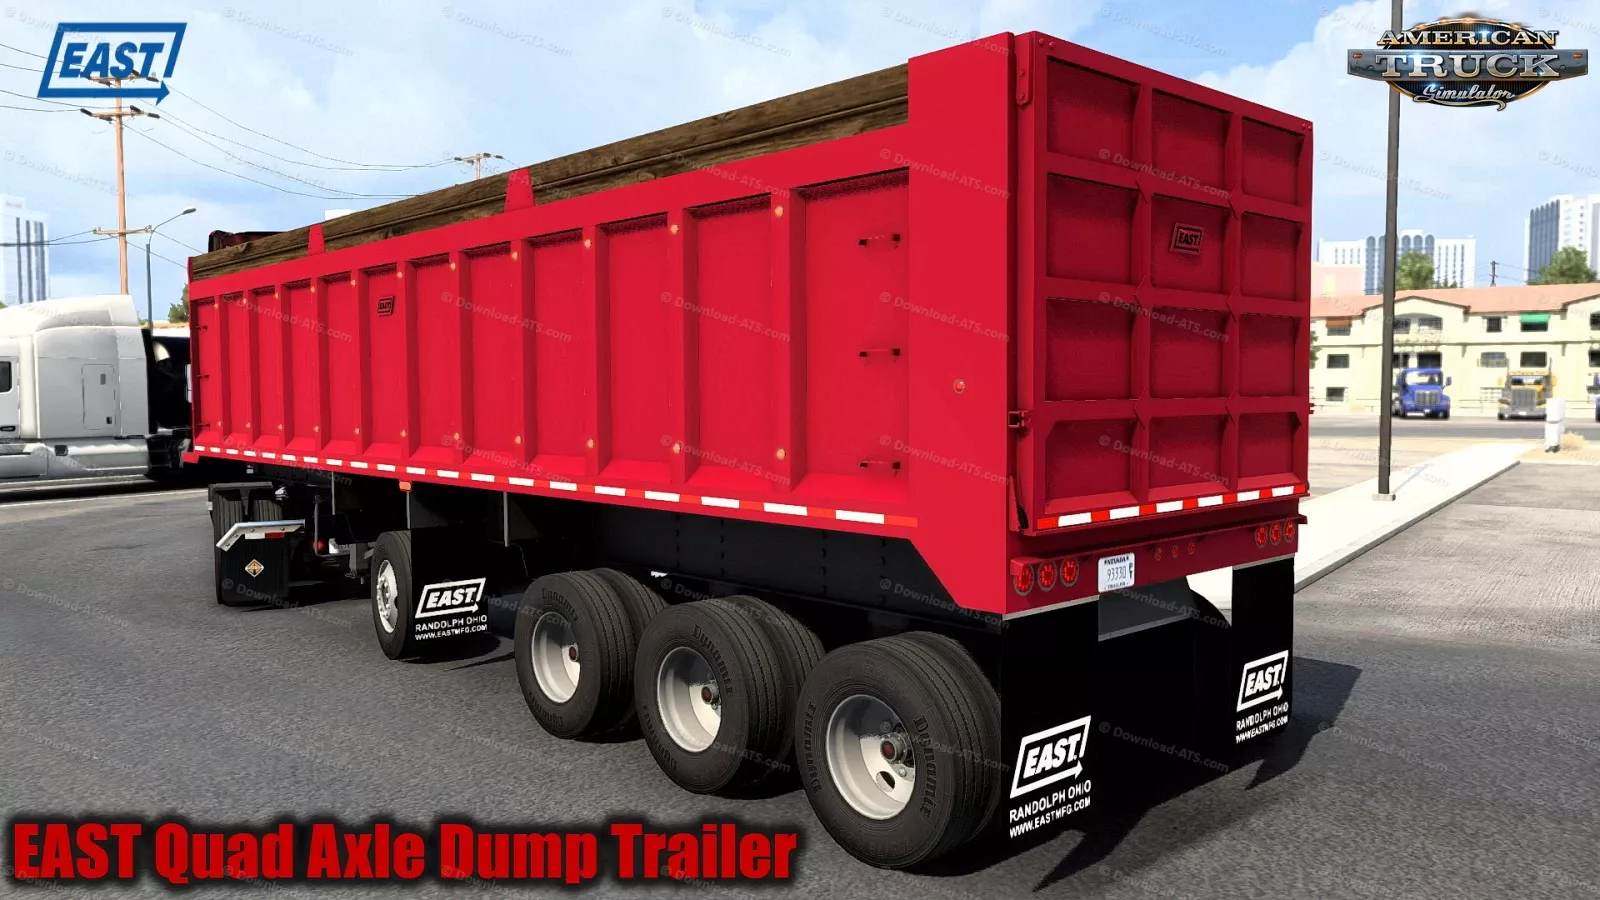 EAST Quad Axle Dump Trailer v2.4 (1.49.x) for ATS